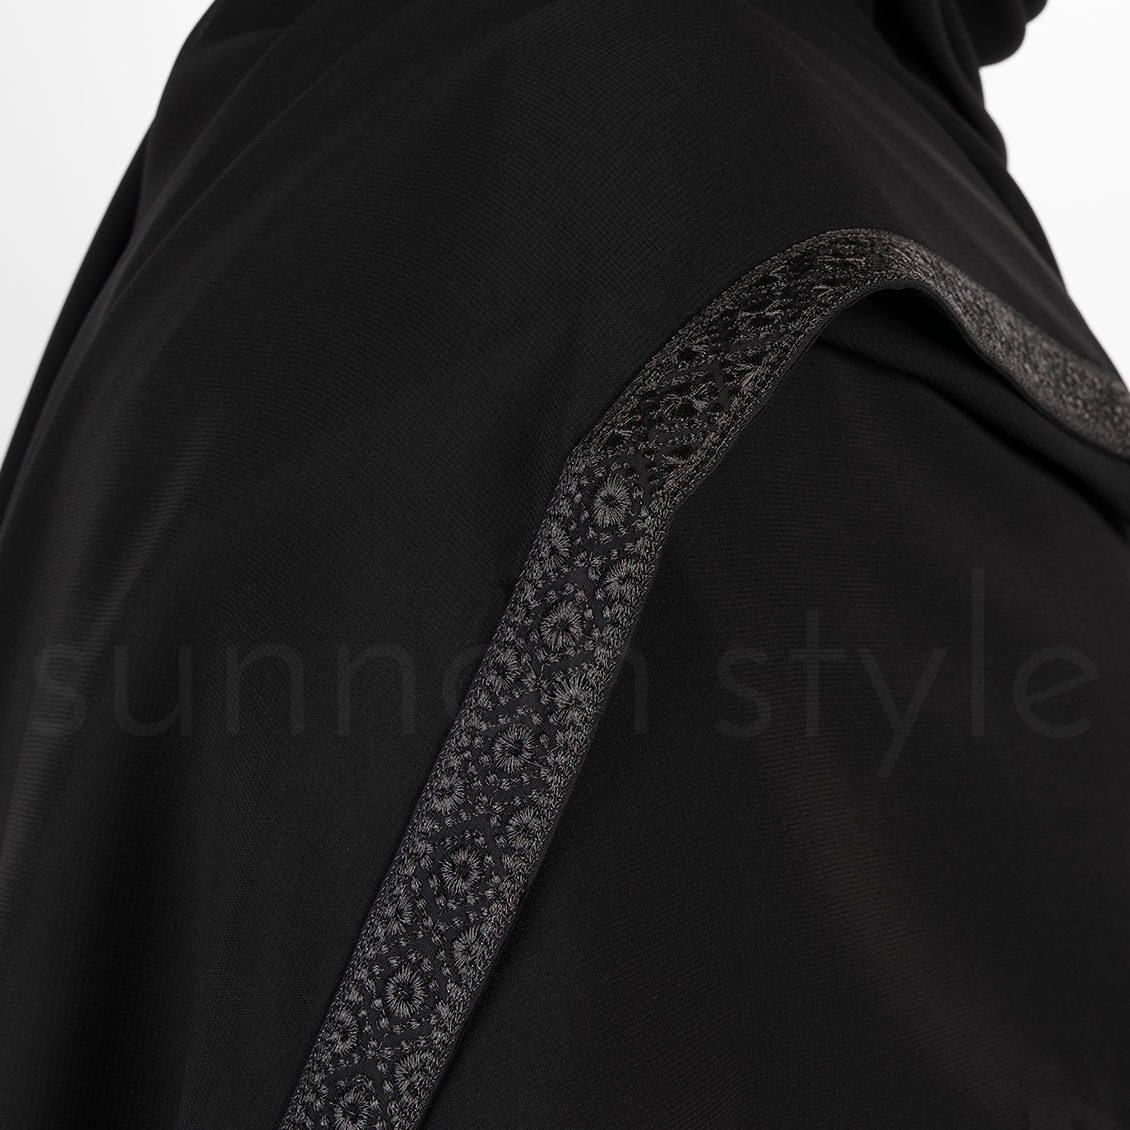 Sunnah Style Obsidian Shayla Embroidered Hijab